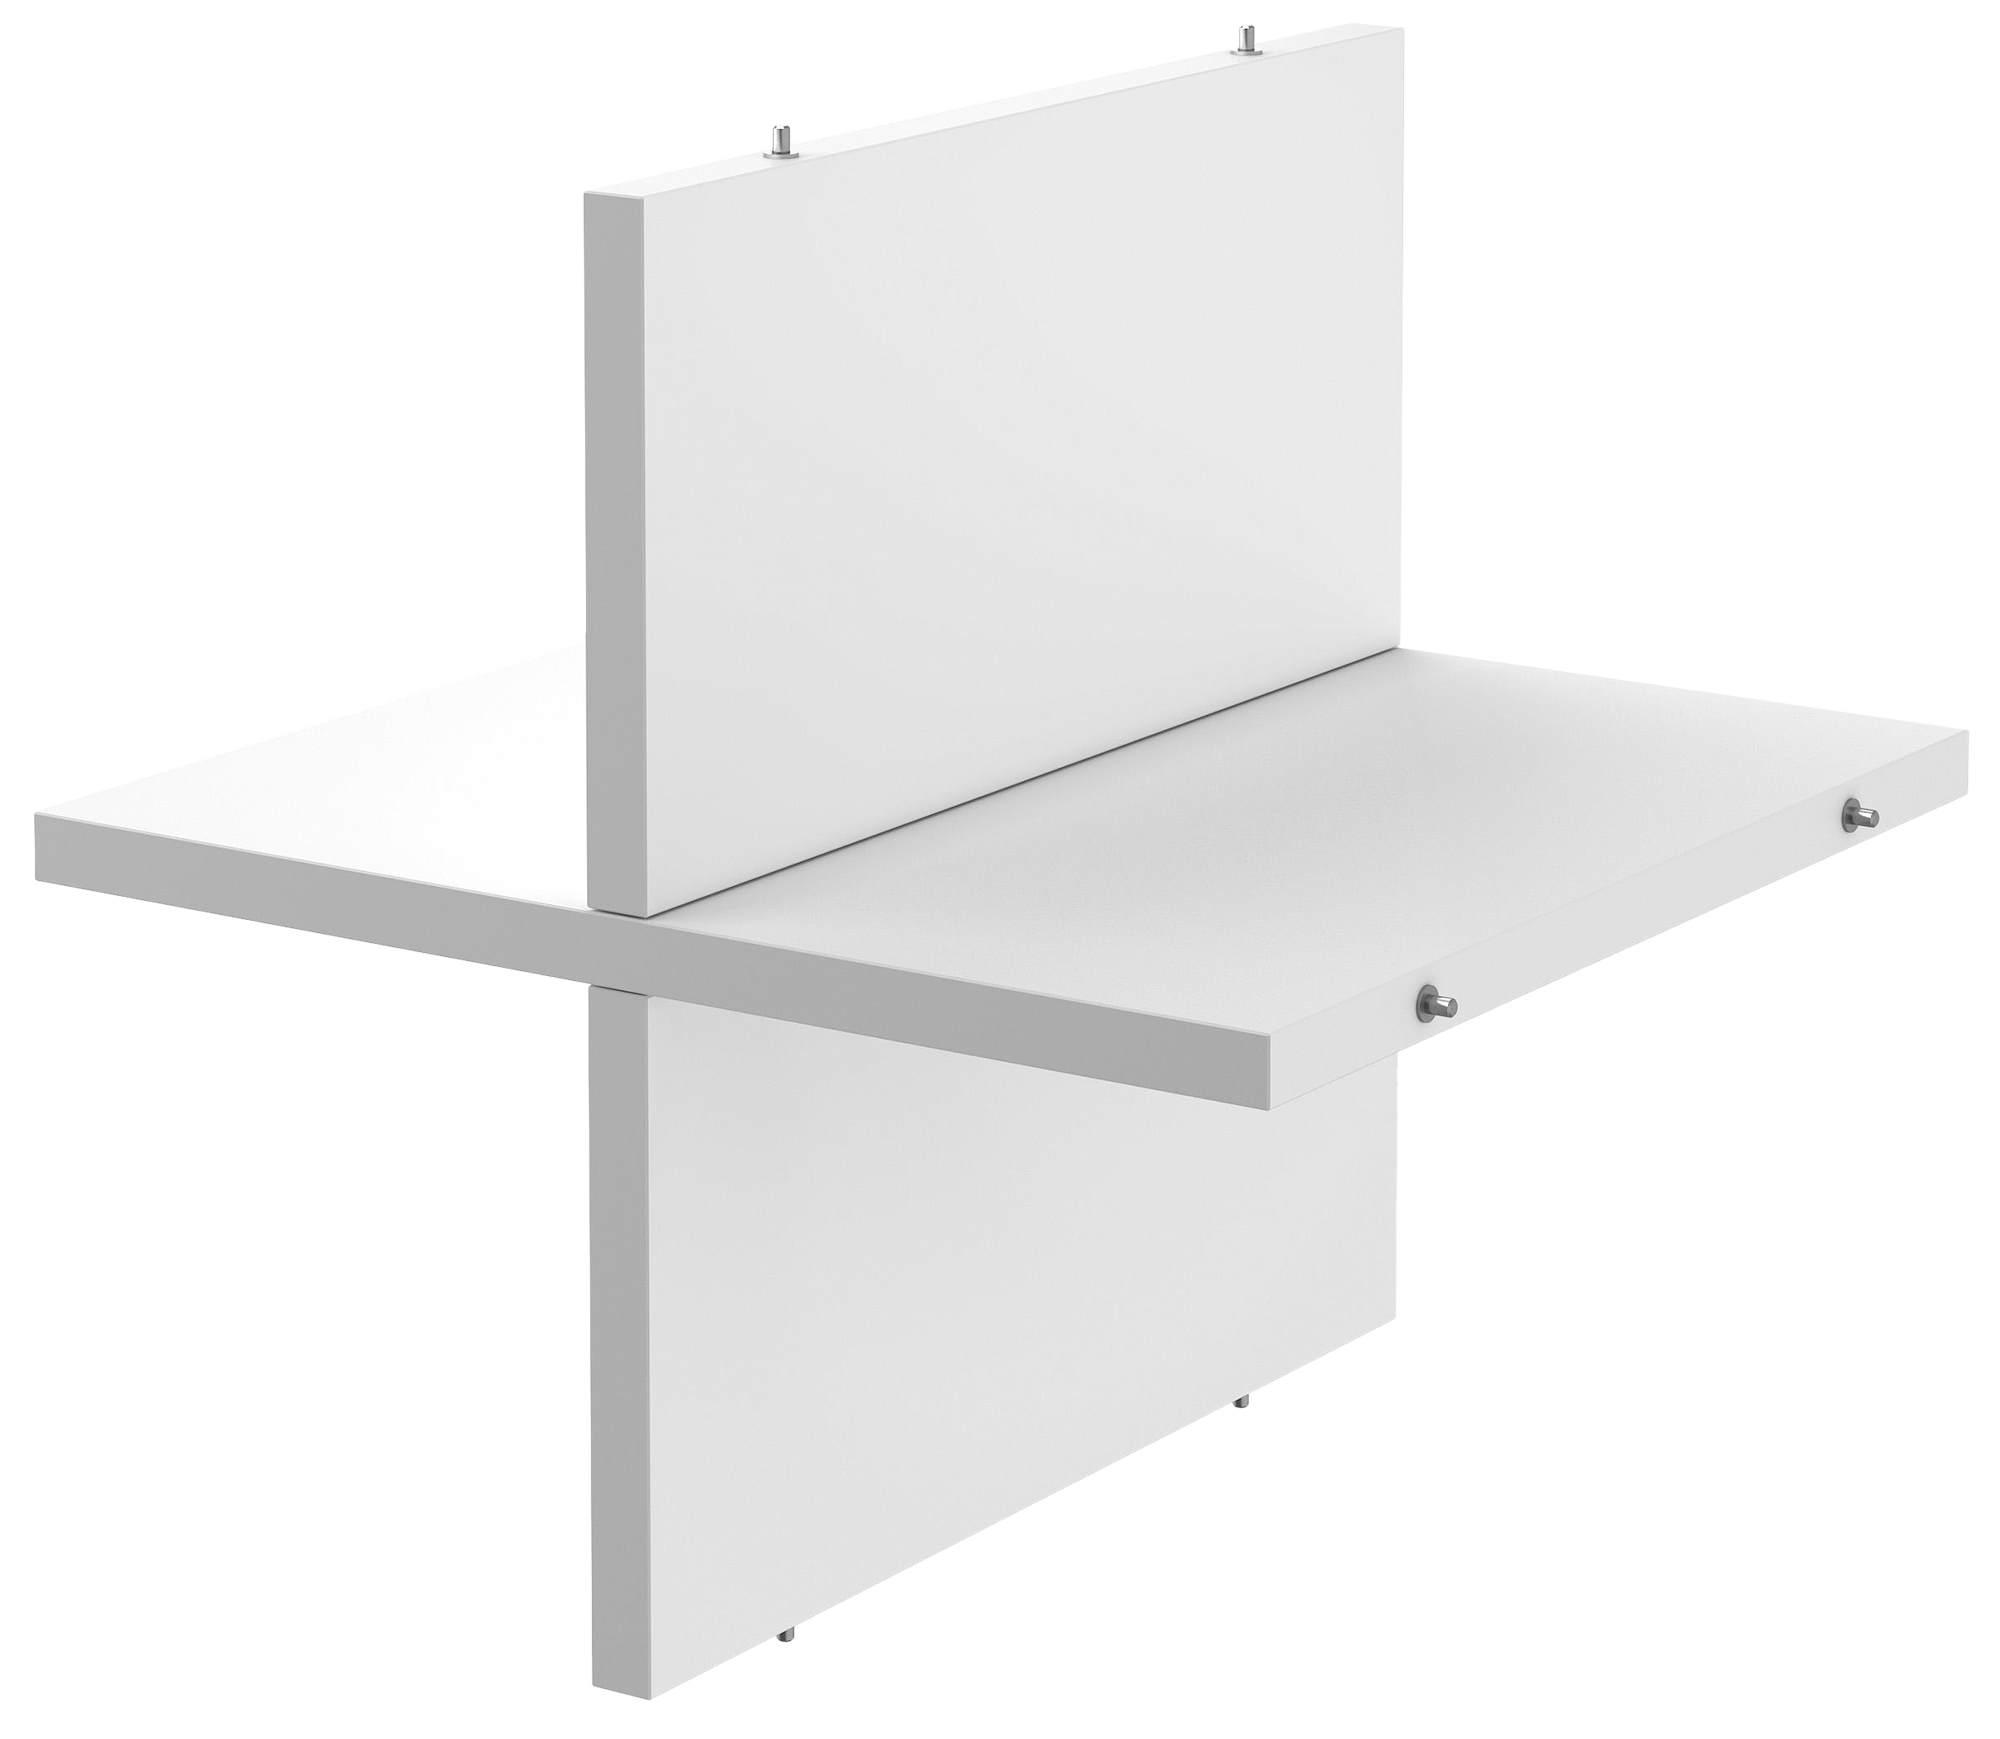 Cruceta spaceo kub blanco 33x33x31.5cm